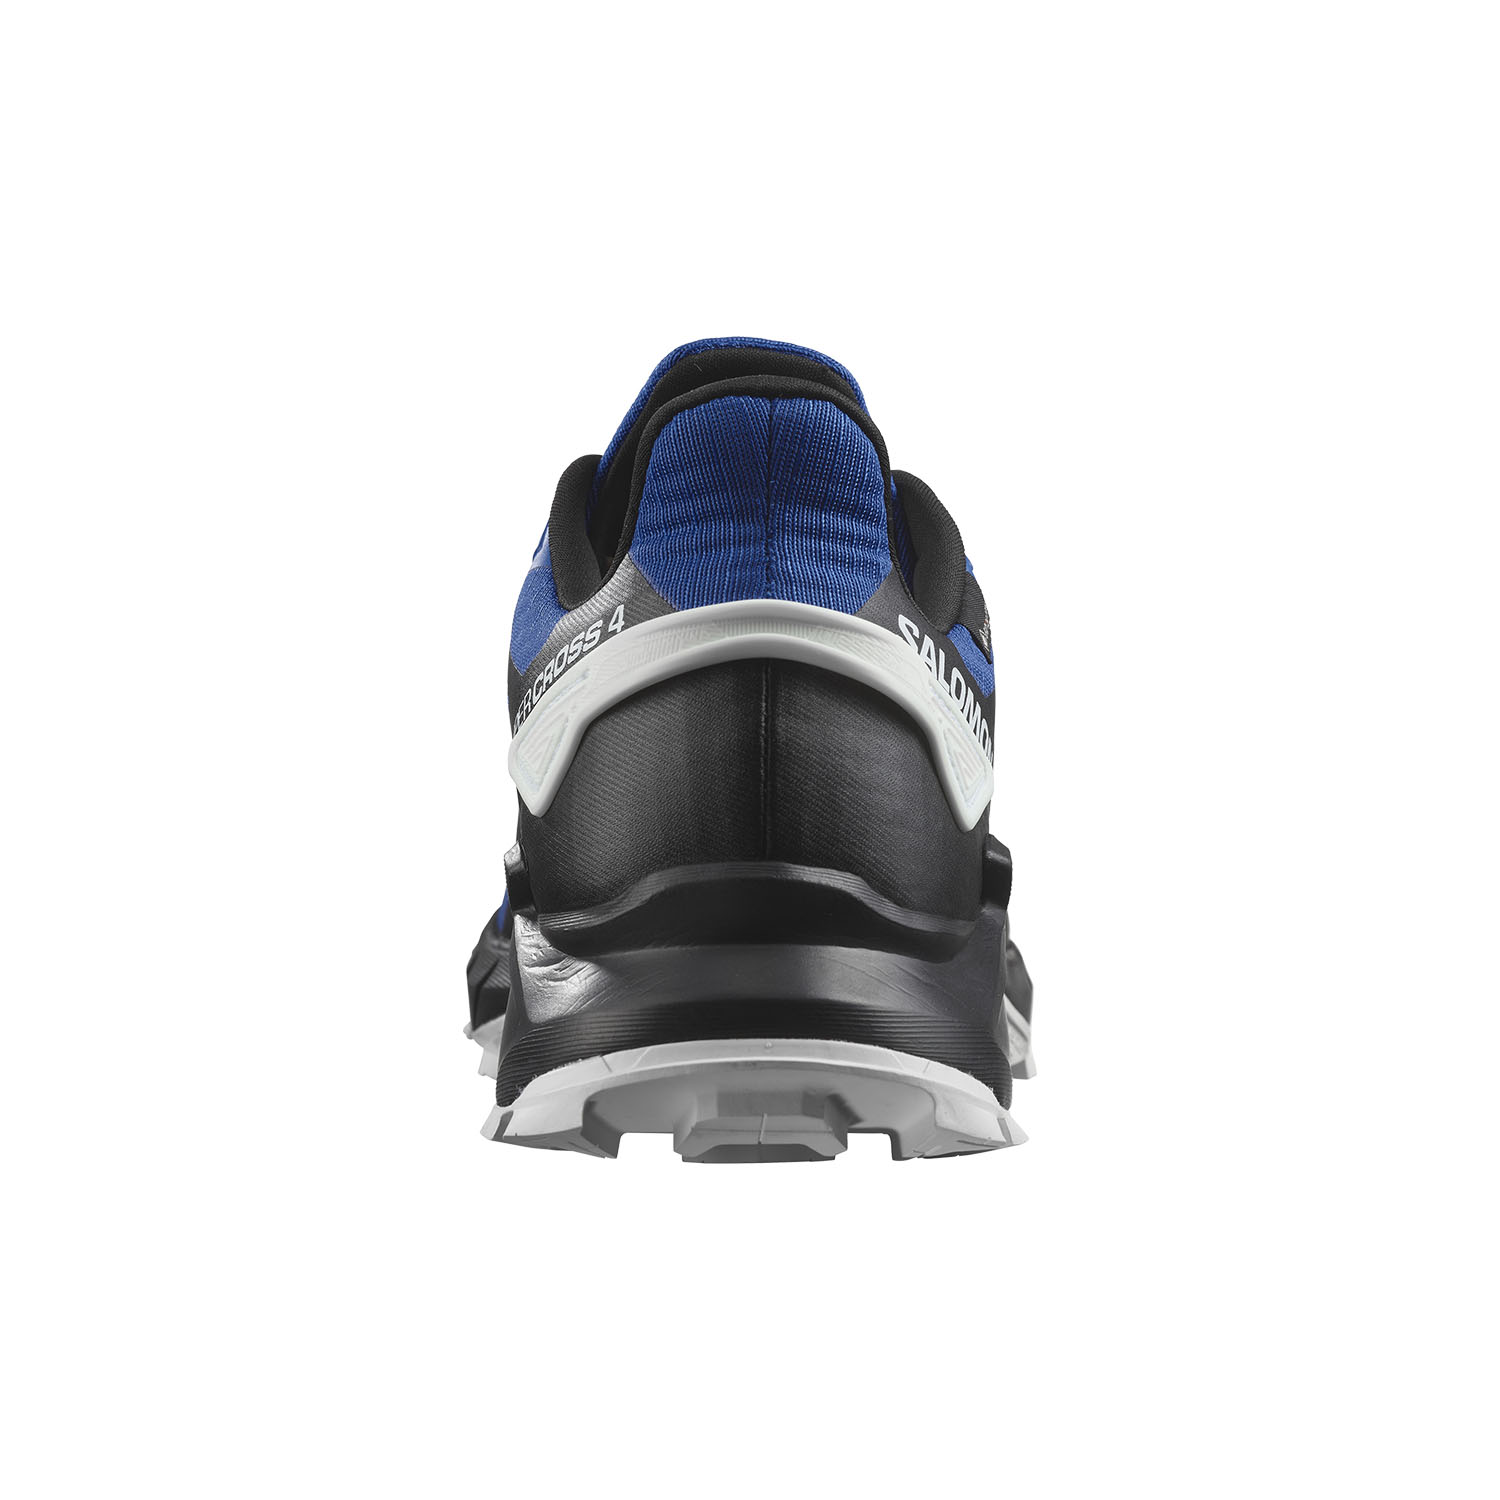 Salomon Supercross 4 GTX - Lapis Blue/Black/White